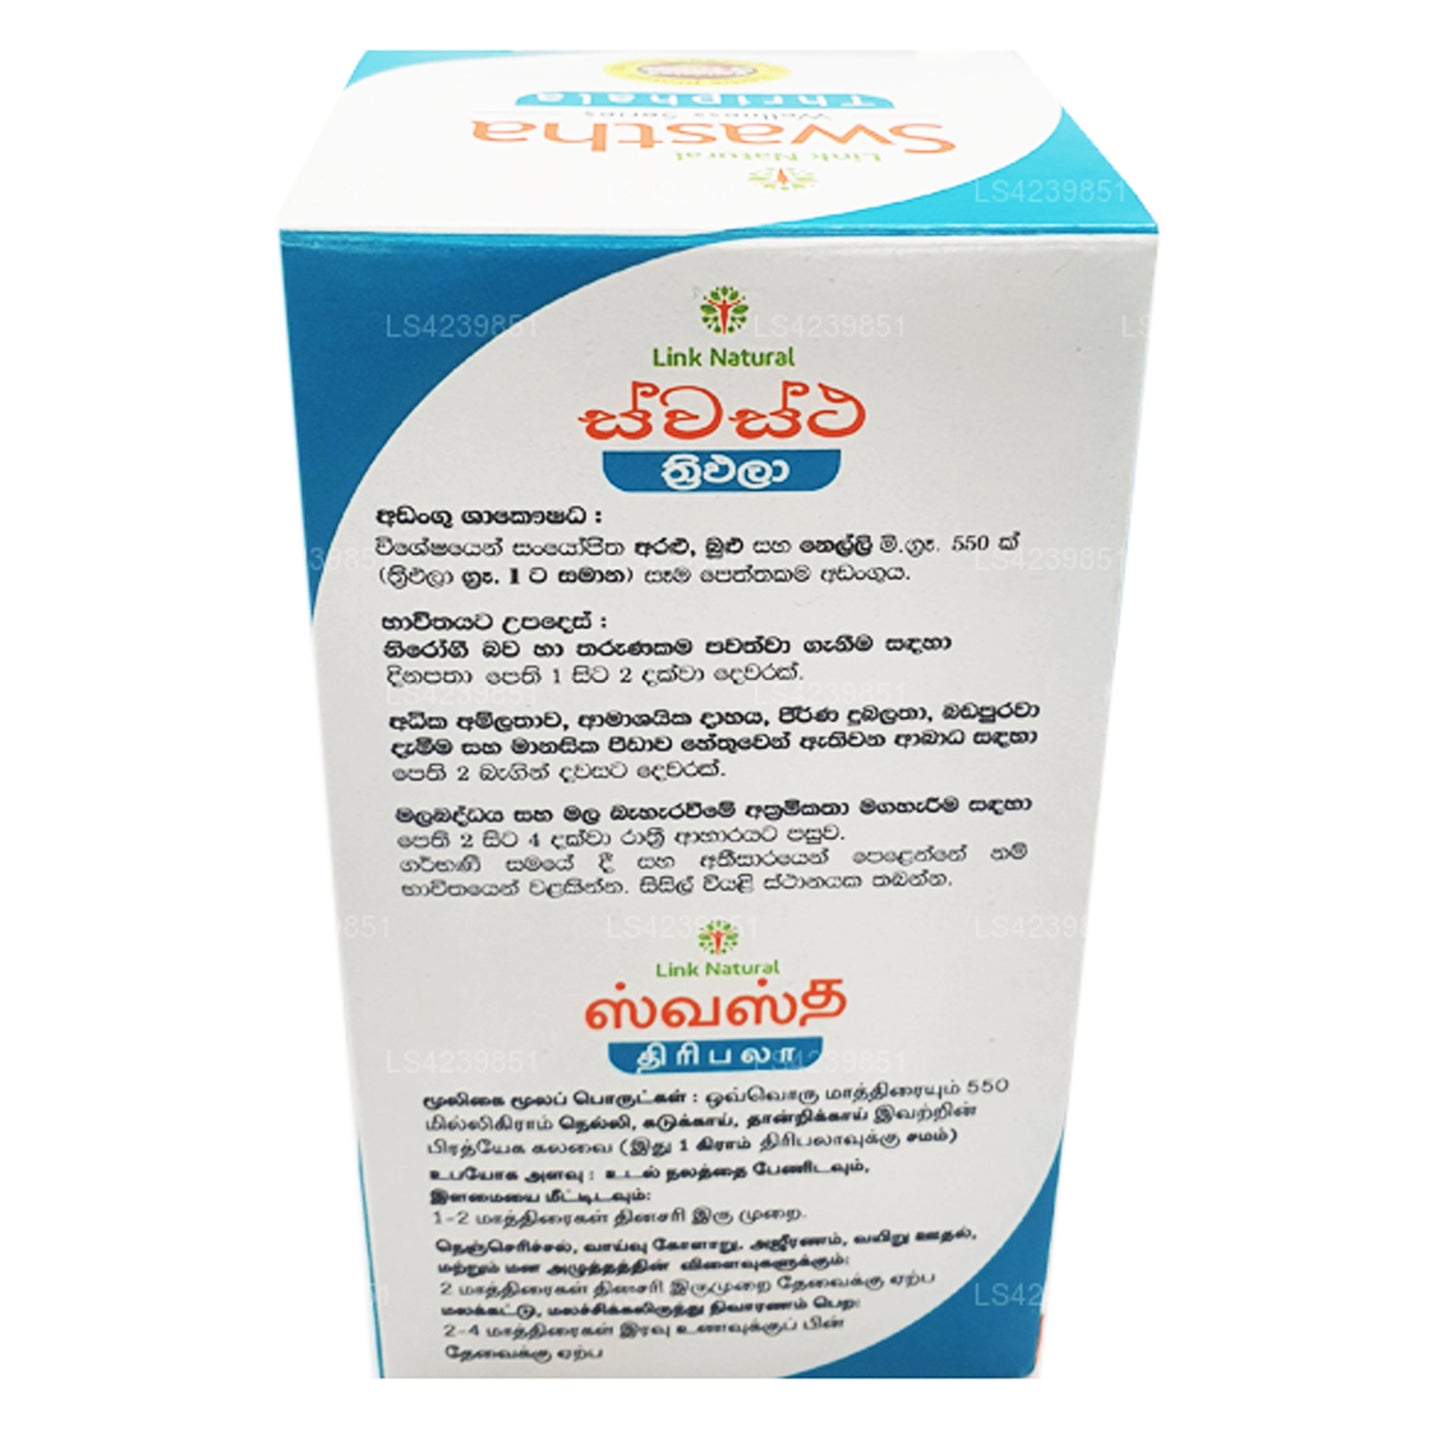 Link Swastha Thriphala (30 comprimidos)